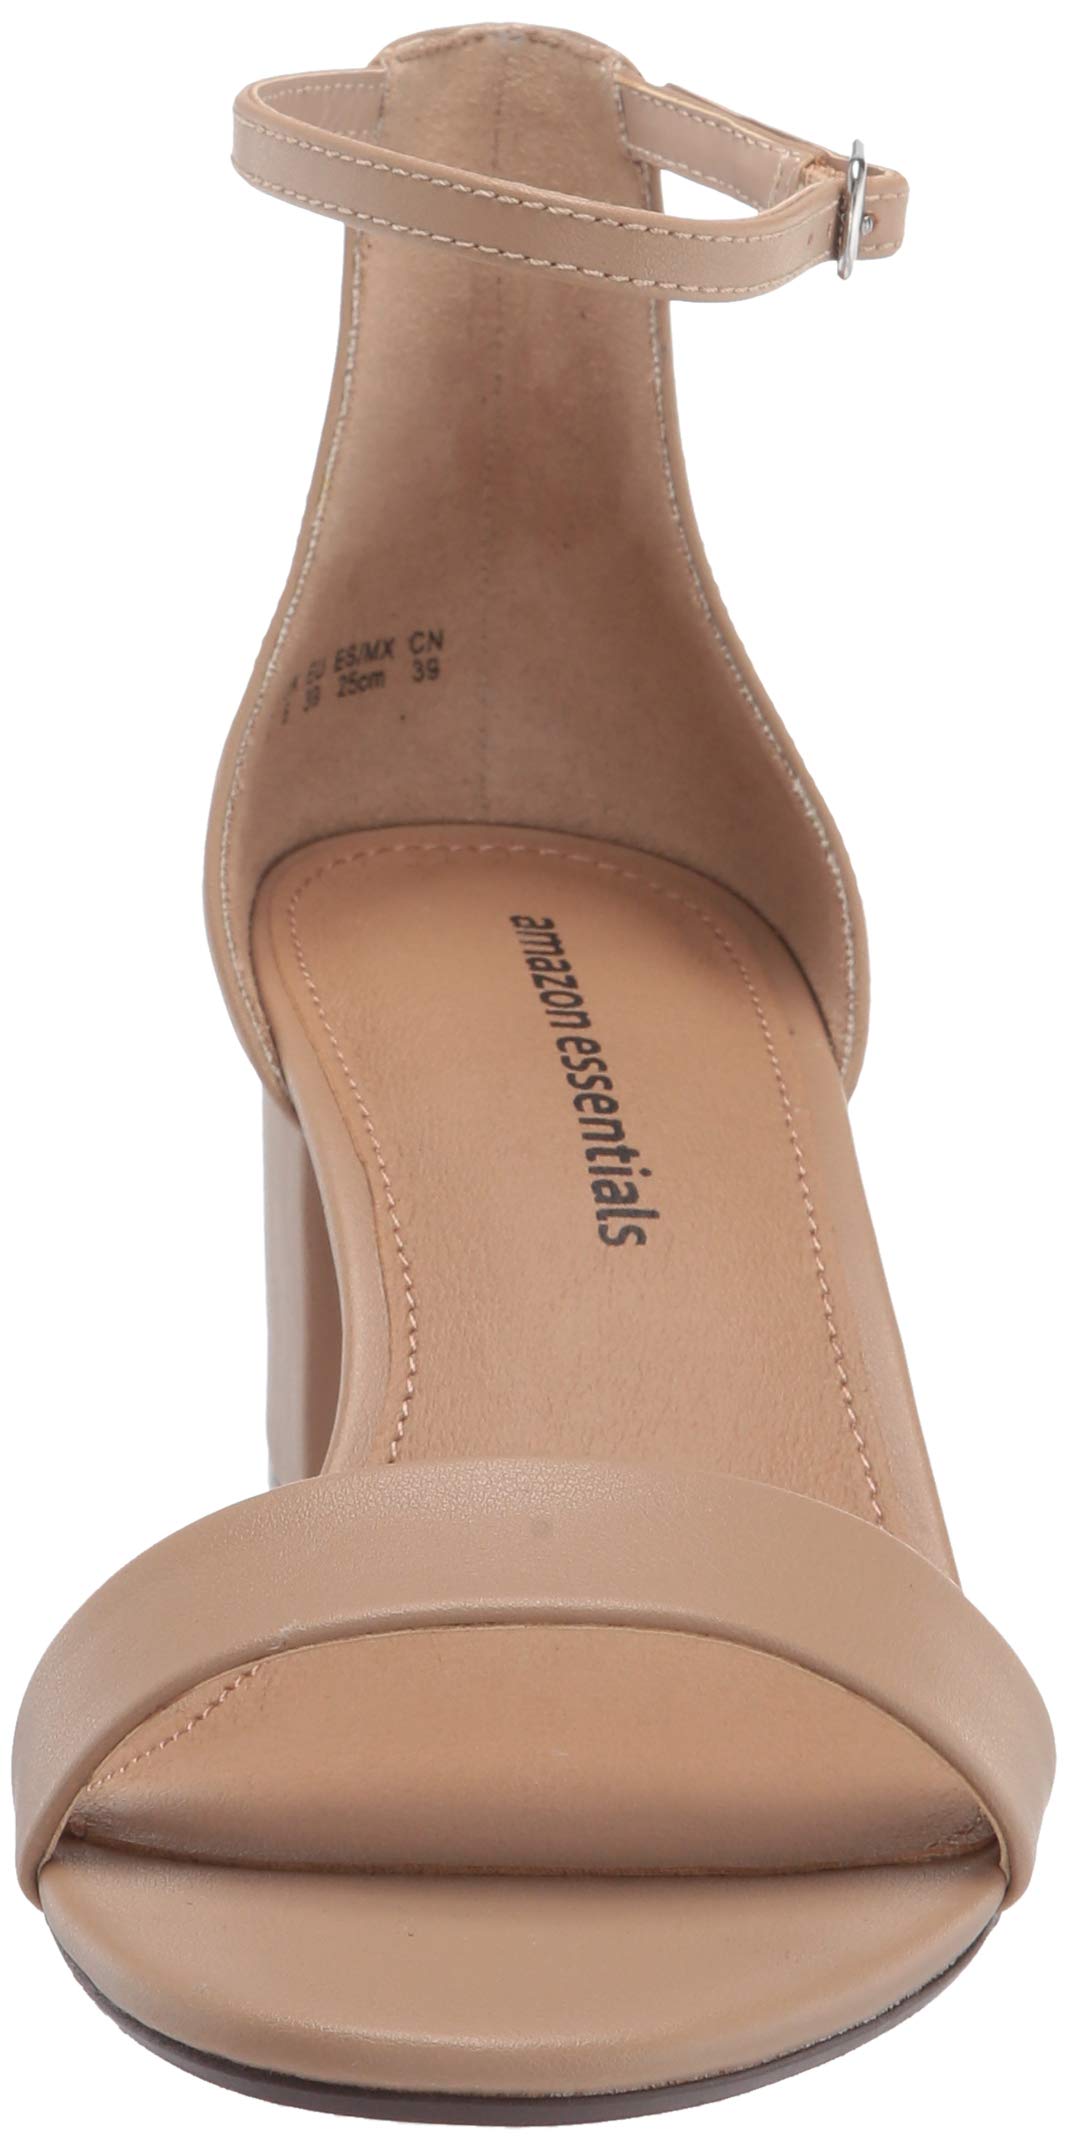 Amazon Essentials Women's Two Strap Heeled Sandal